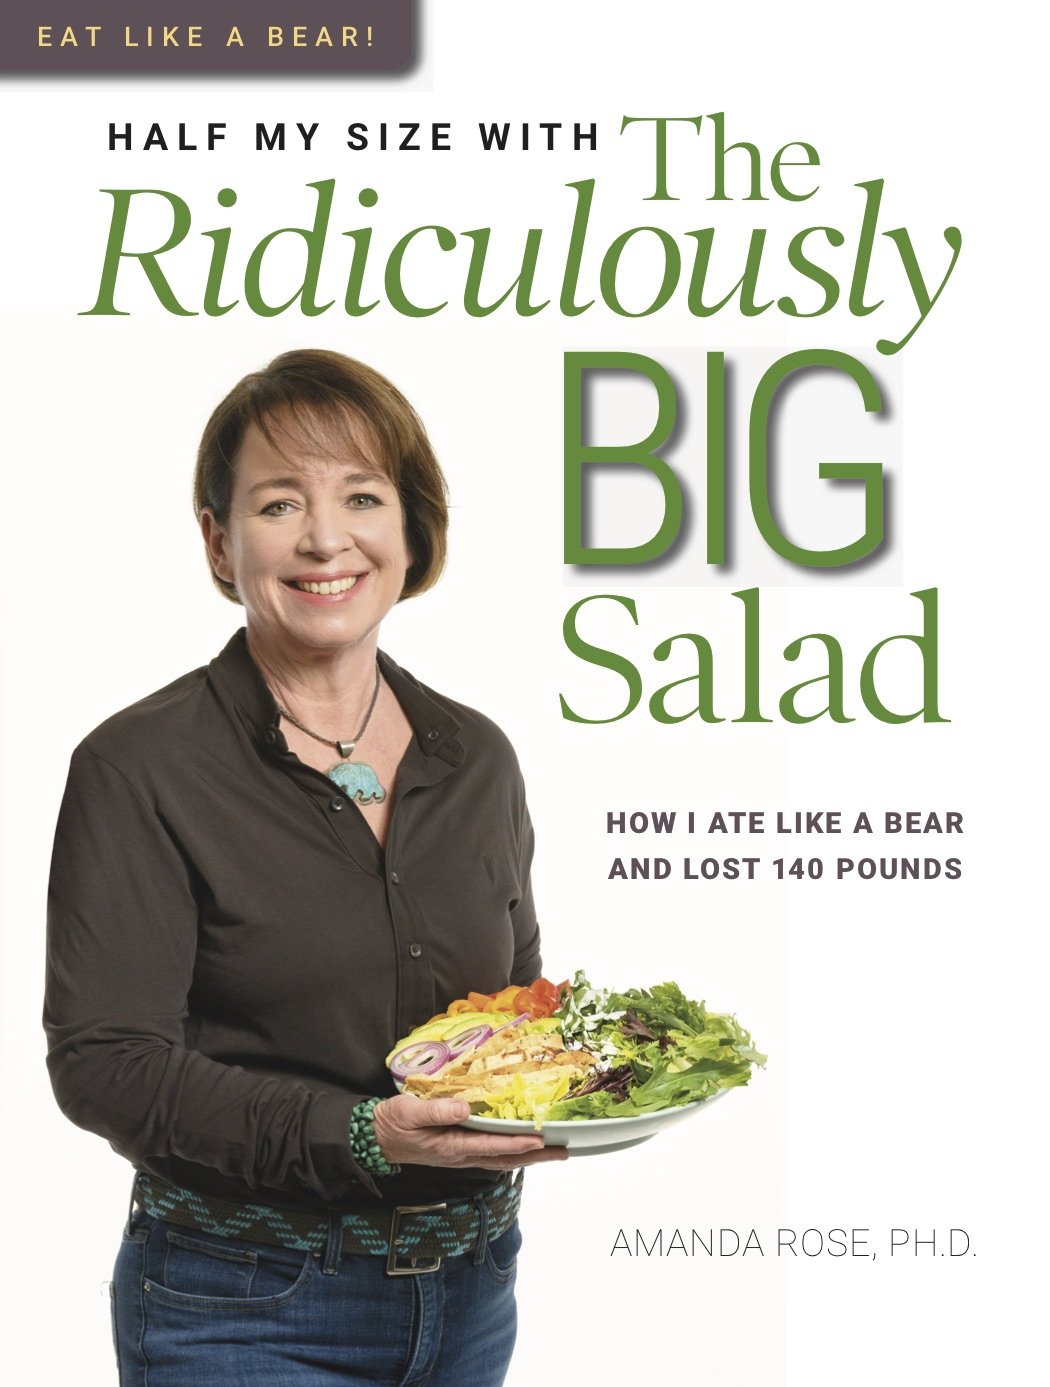 The Ridiculously Big Salad prologue